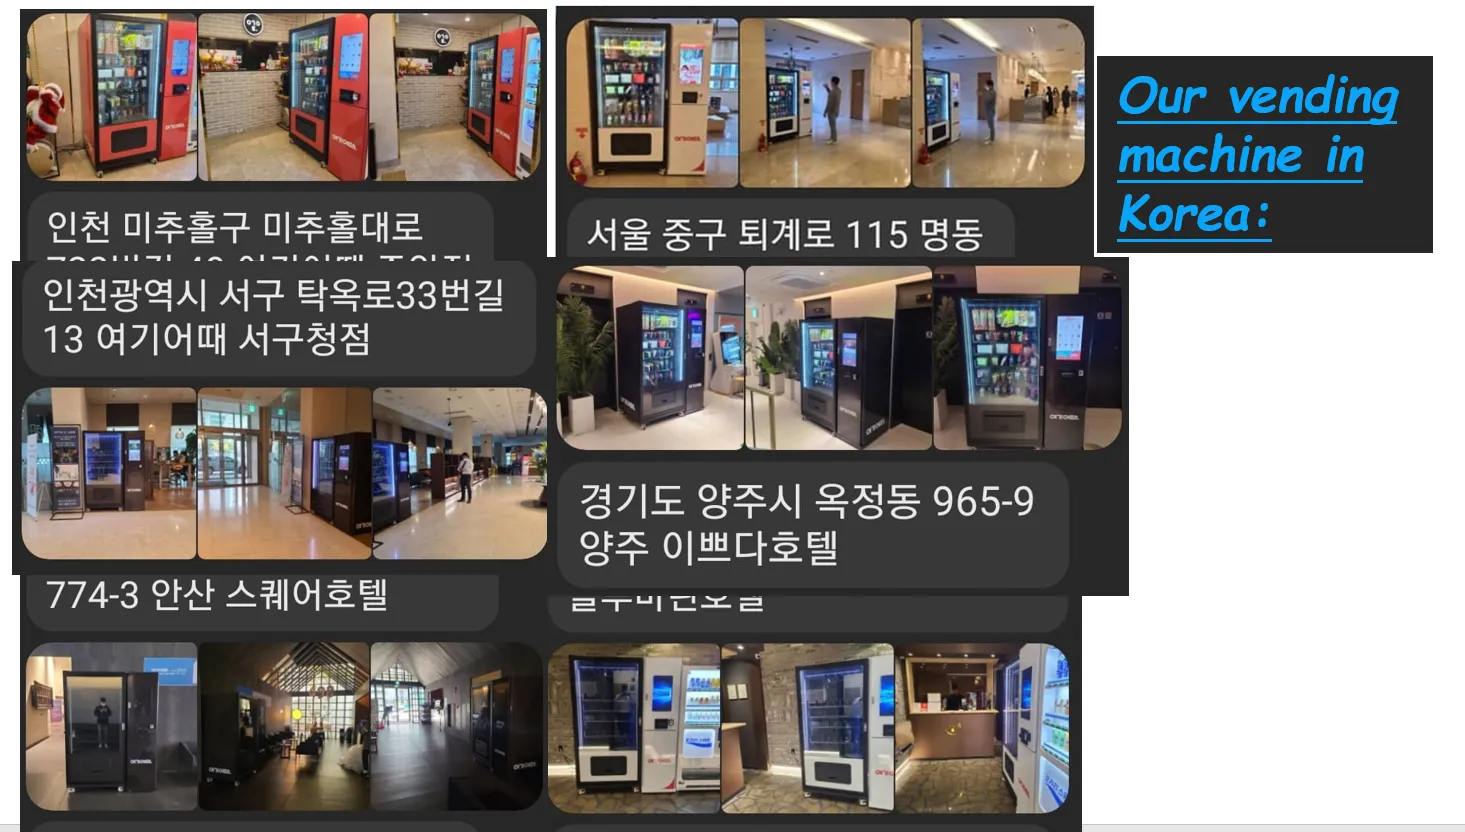 alcohol xy elevator beer vending machine in Korea